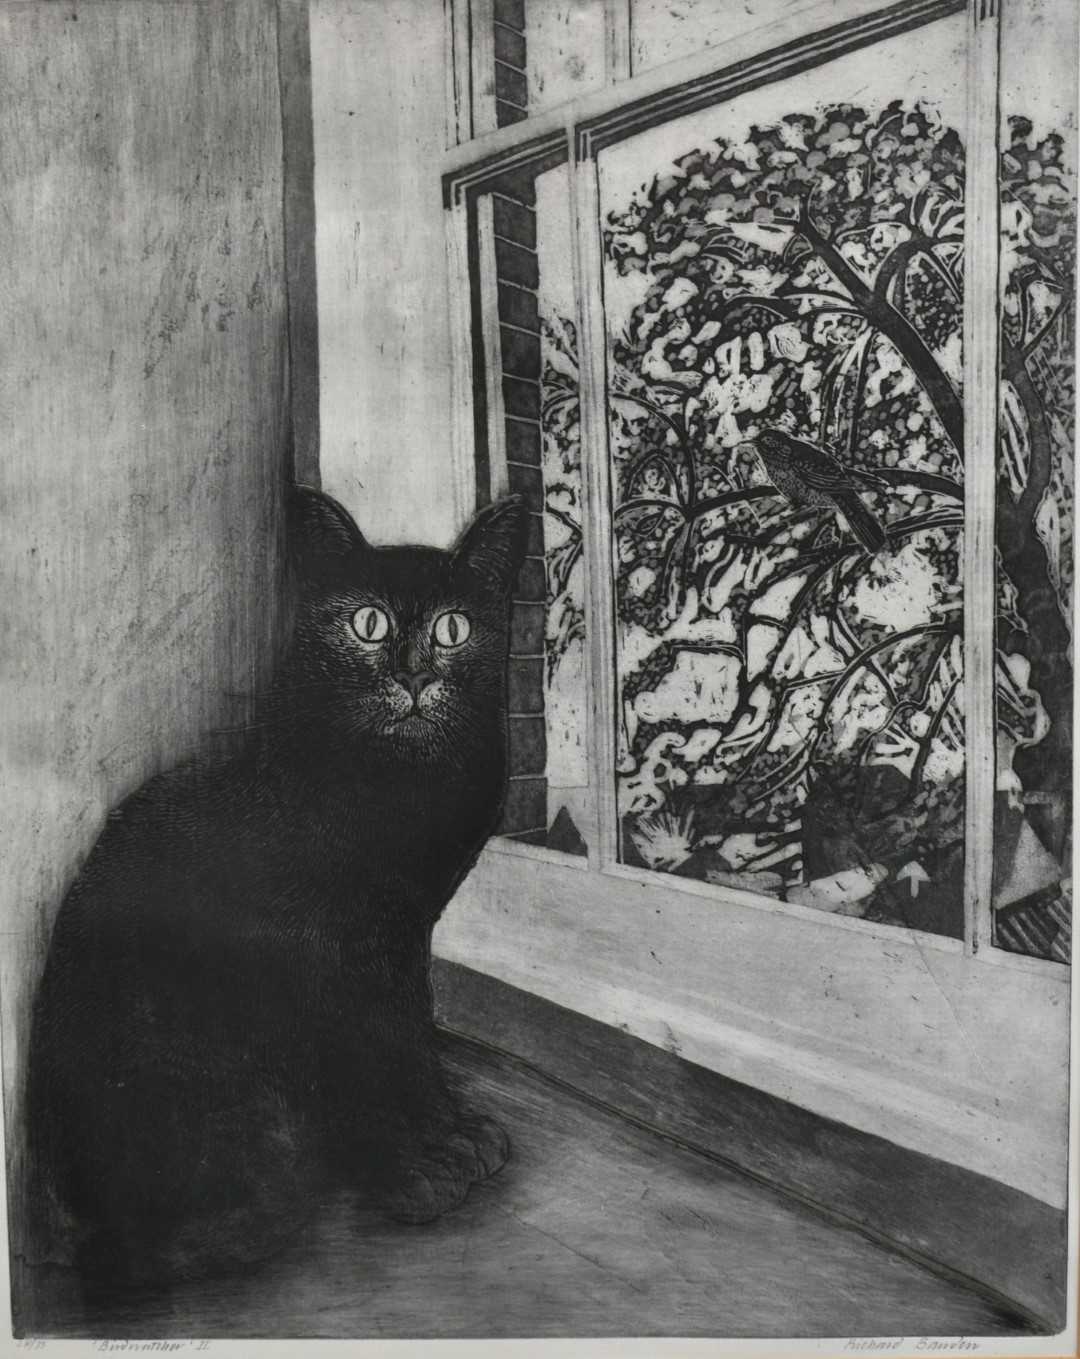 Lot 851 - *Richard Bawden (b.1936) signed limited edition etching - 'Birdwatcher' II, 59cm x 47cm, in glazed frame